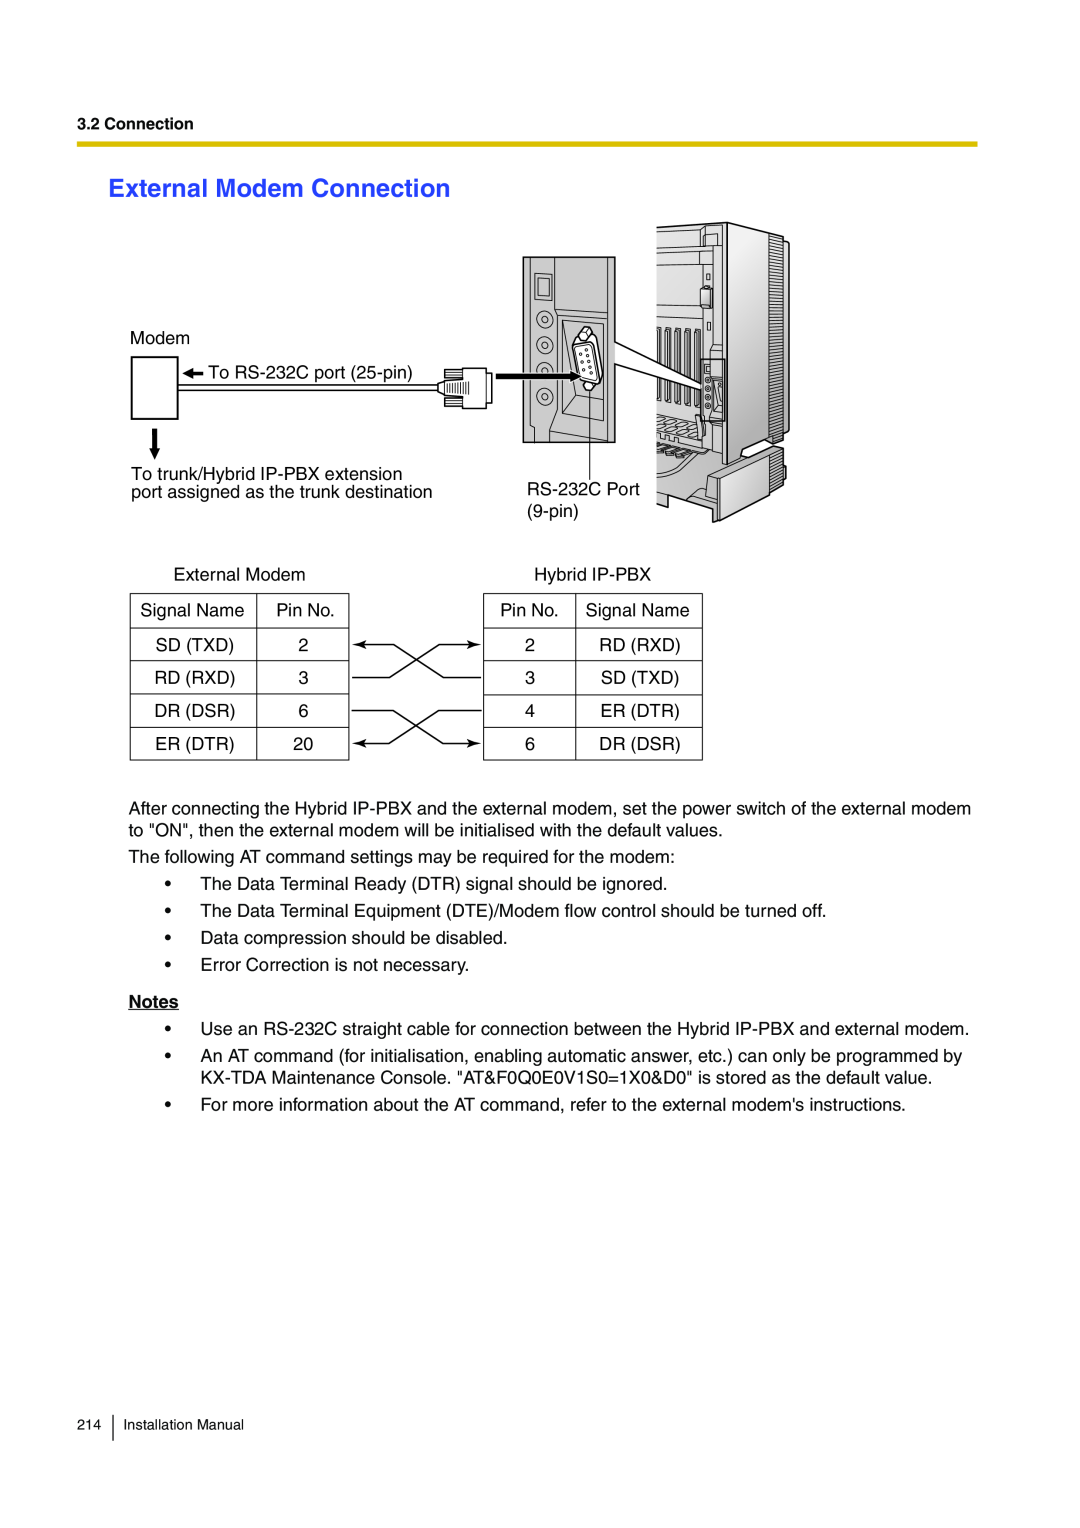 Panasonic KX-TDA100 installation manual External Modem Connection, Installation Manual 